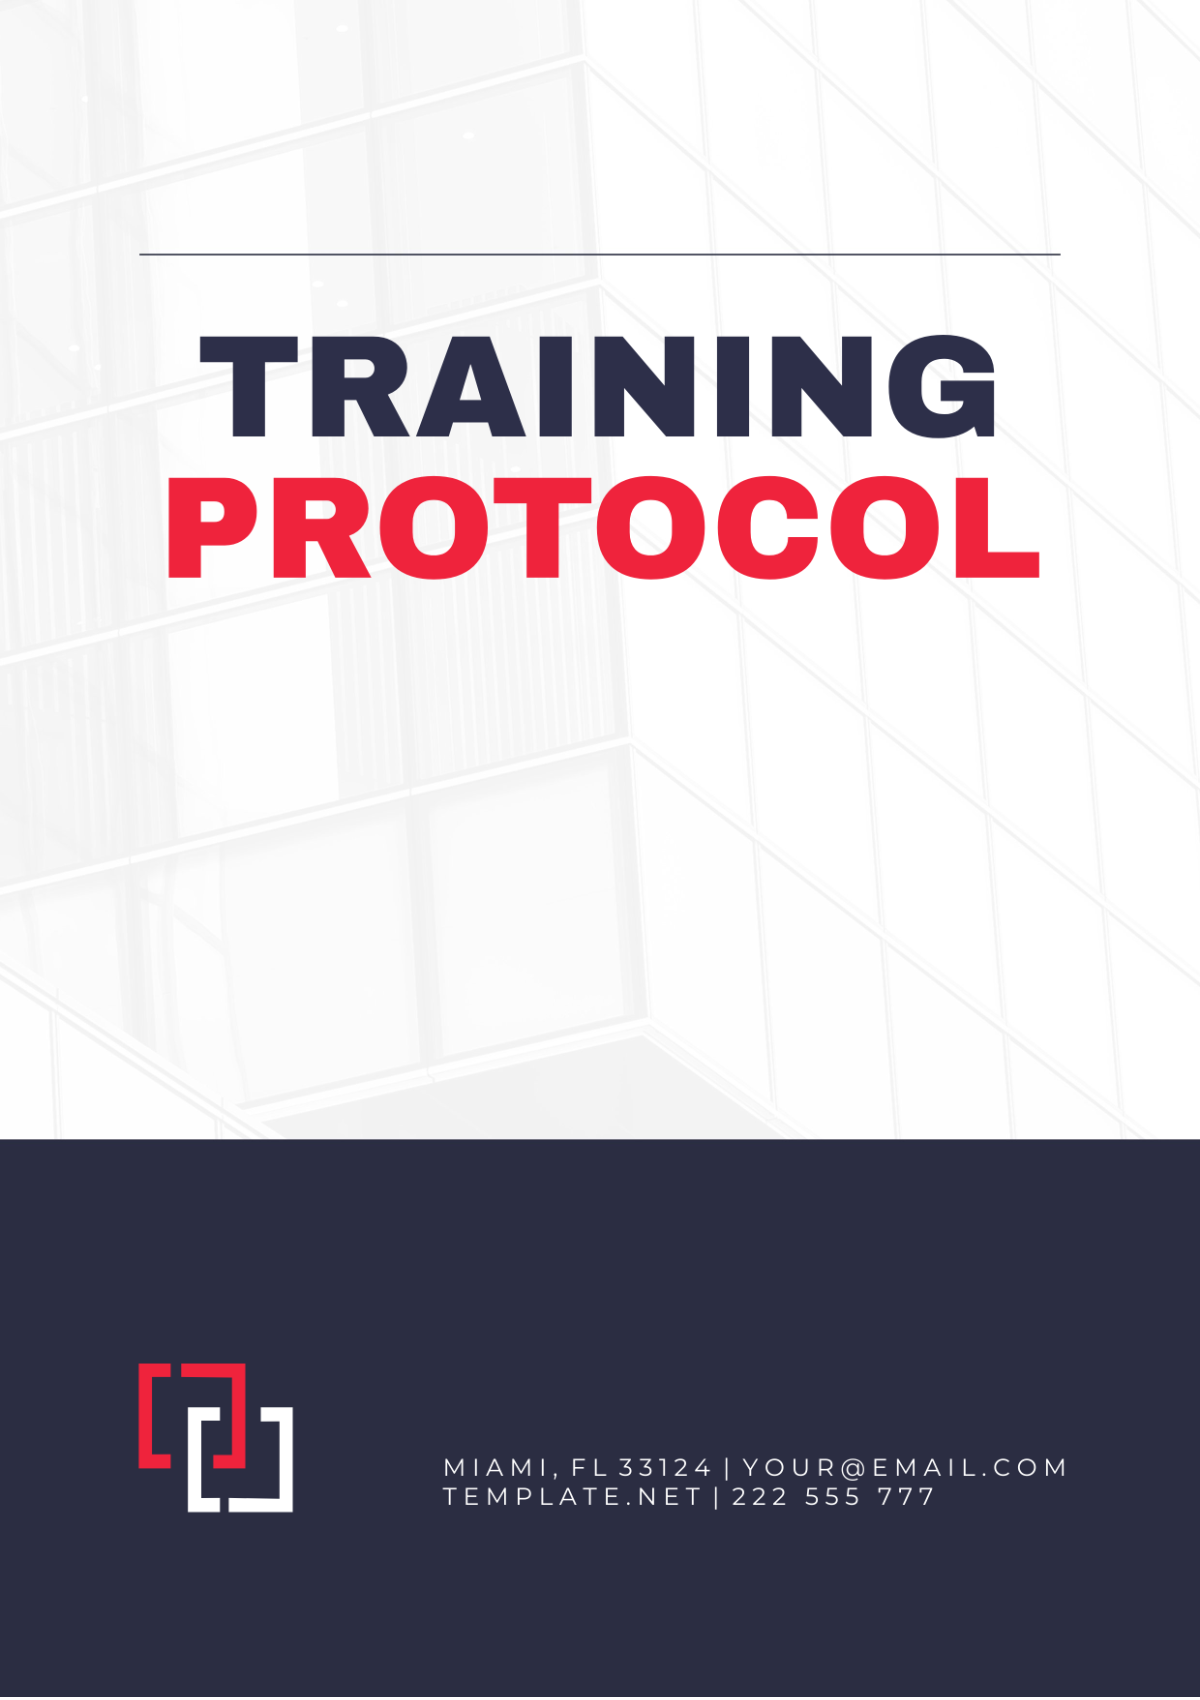 Training Protocol Template